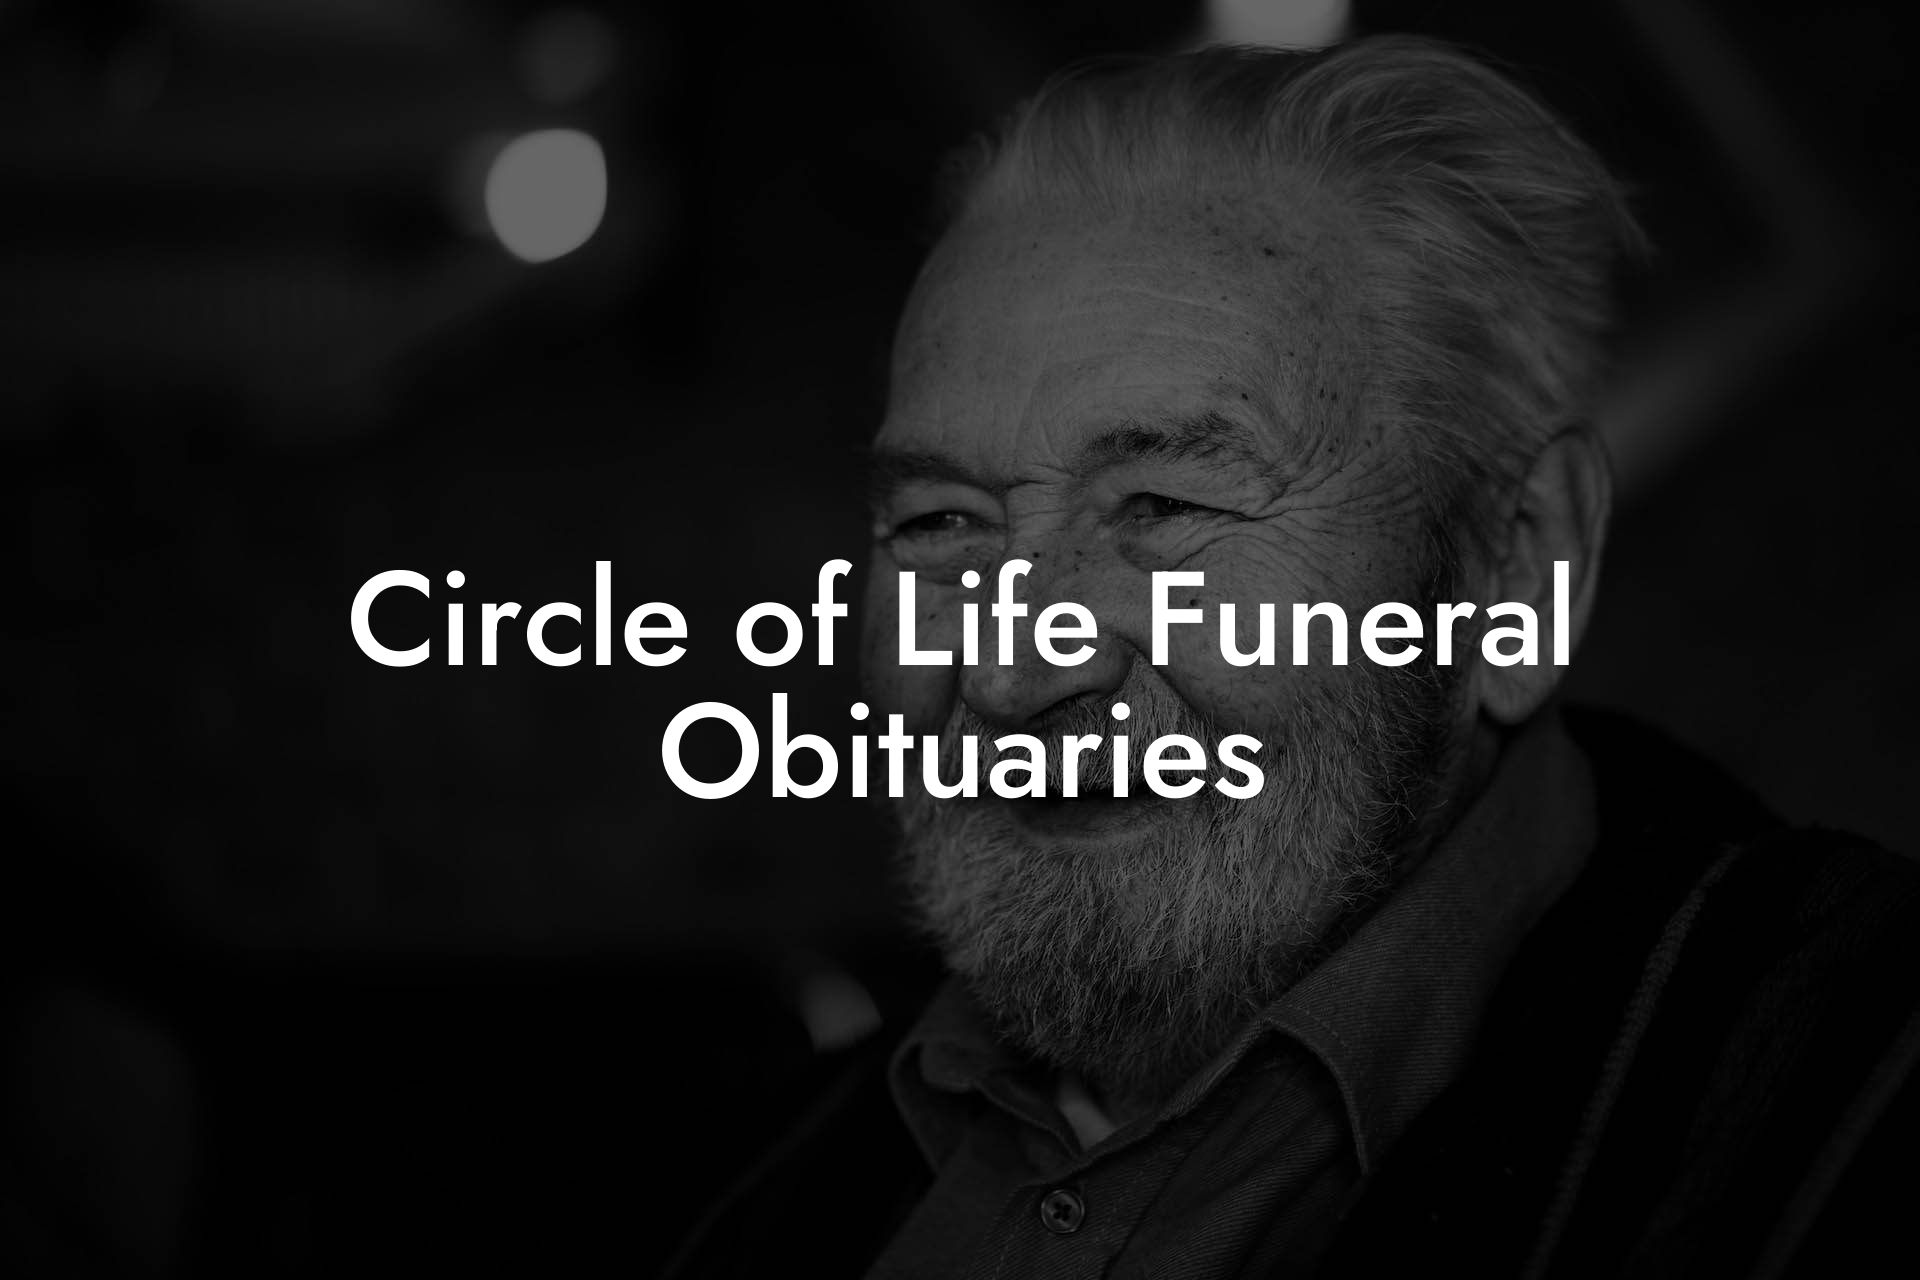 Circle of Life Funeral Obituaries